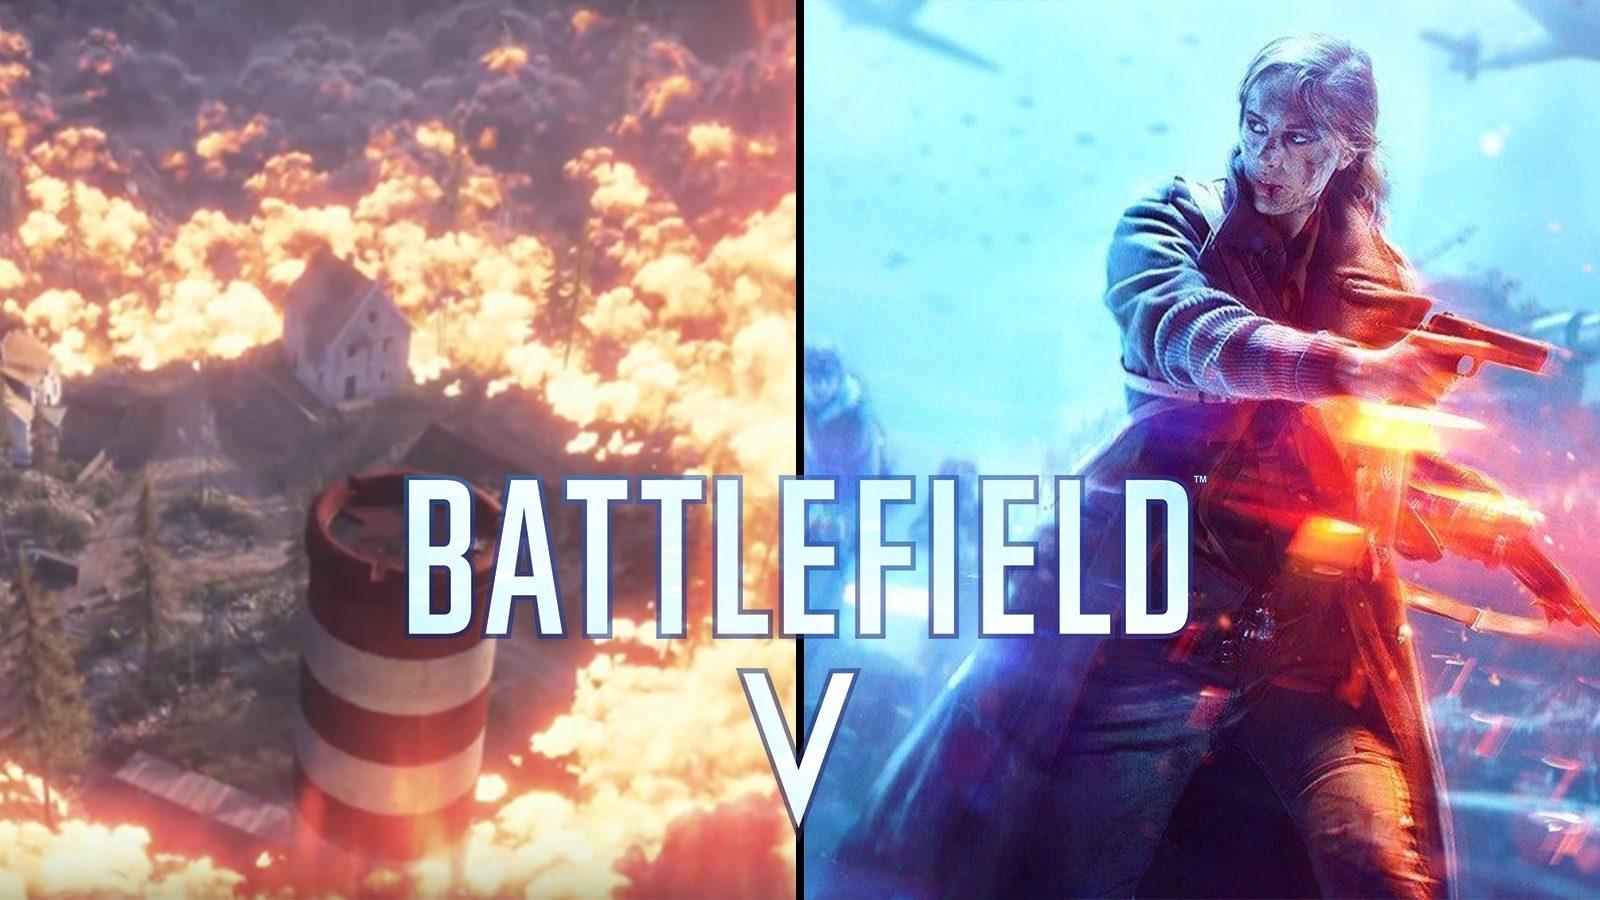 Does Battlefield V have a battle royale mode? 